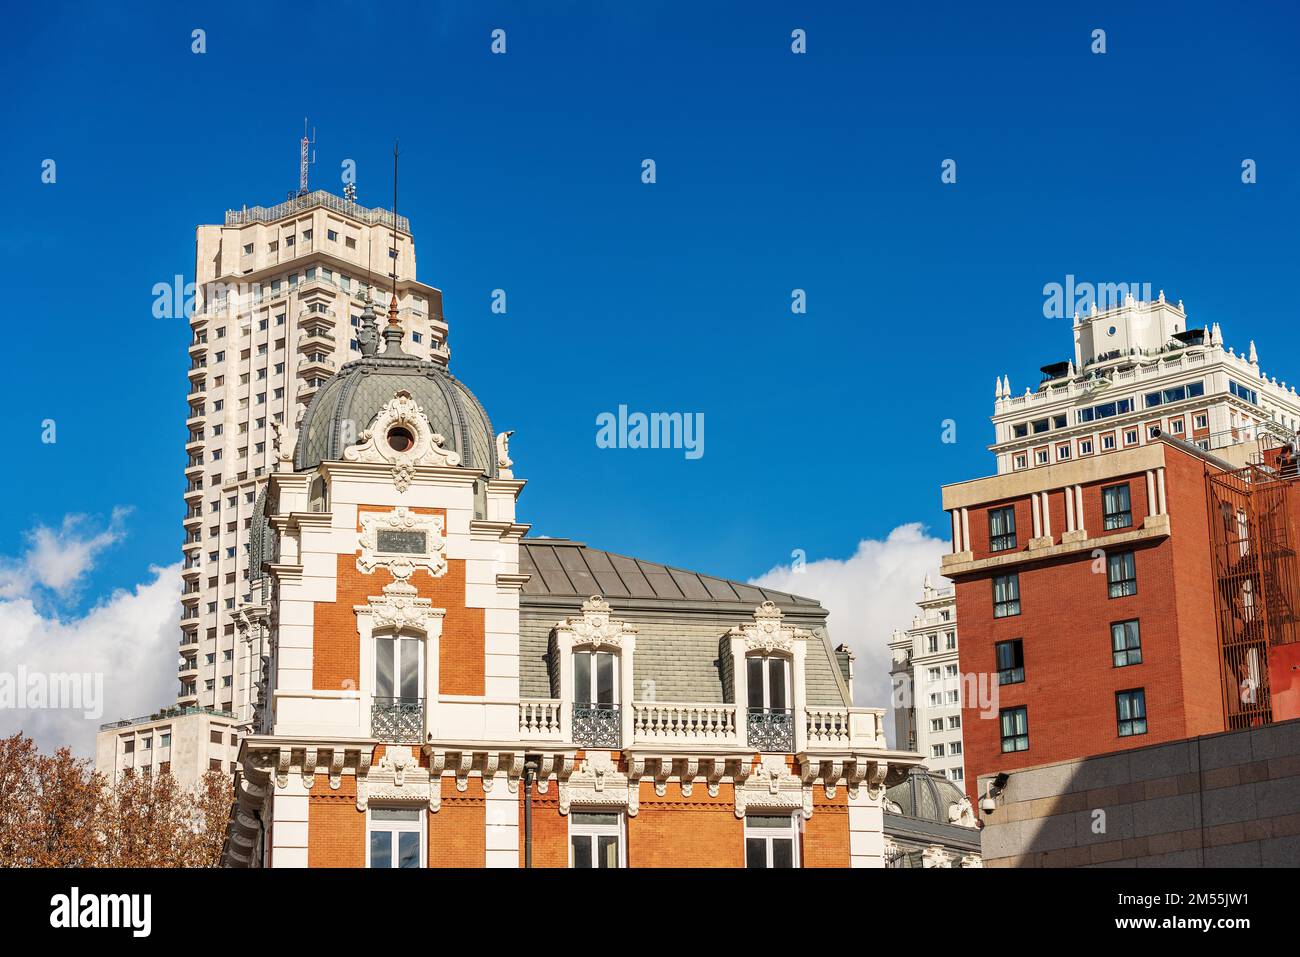 Urban skyline in Plaza de Espana (Spain Square) with the beautiful ...